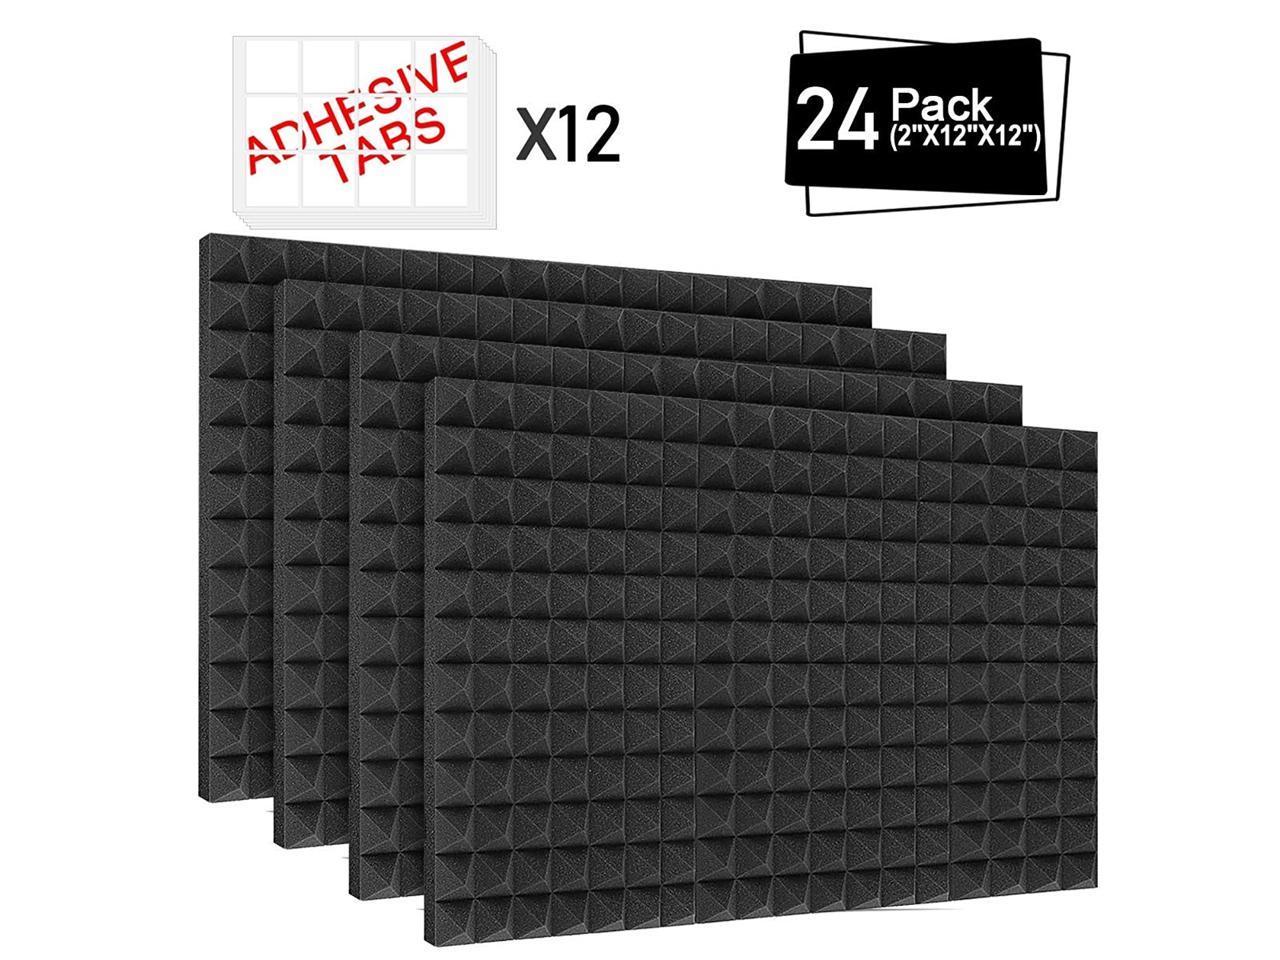 12 Pack 2 X 12 X 12 Acoustic Foam Panels Studio Foam Wedge Tiles Sound Proof Padding DEKIRU Soundproofing Foam Panels Ideal for Home & Studio Wall Sound Insulation 